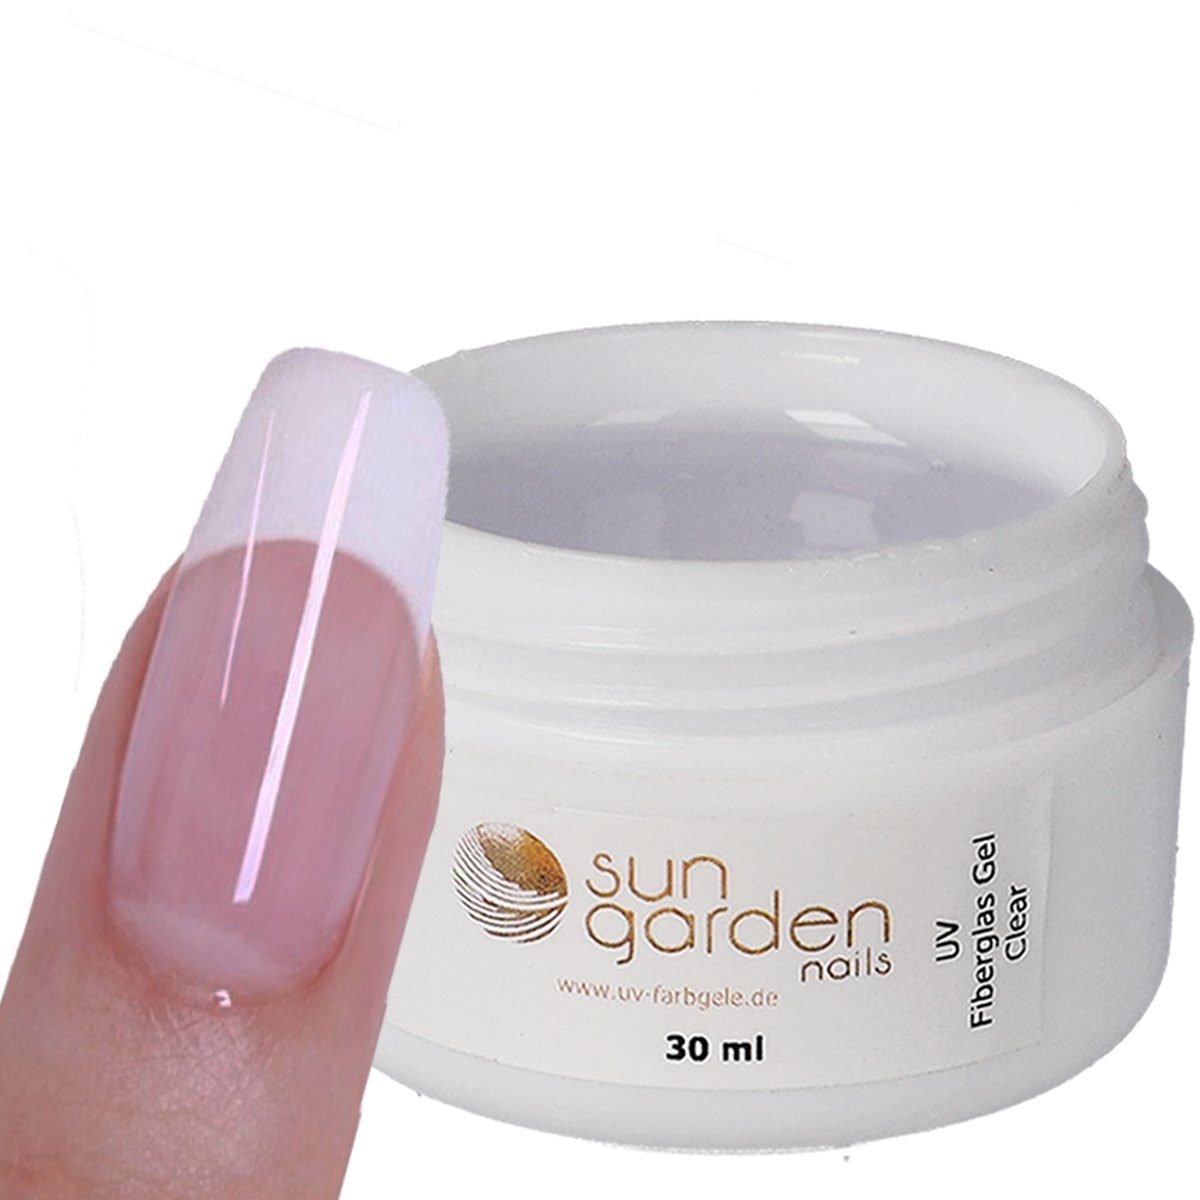 Nails Garden Fiberglas ml 30 Klar Nagellack Gel Sun UV